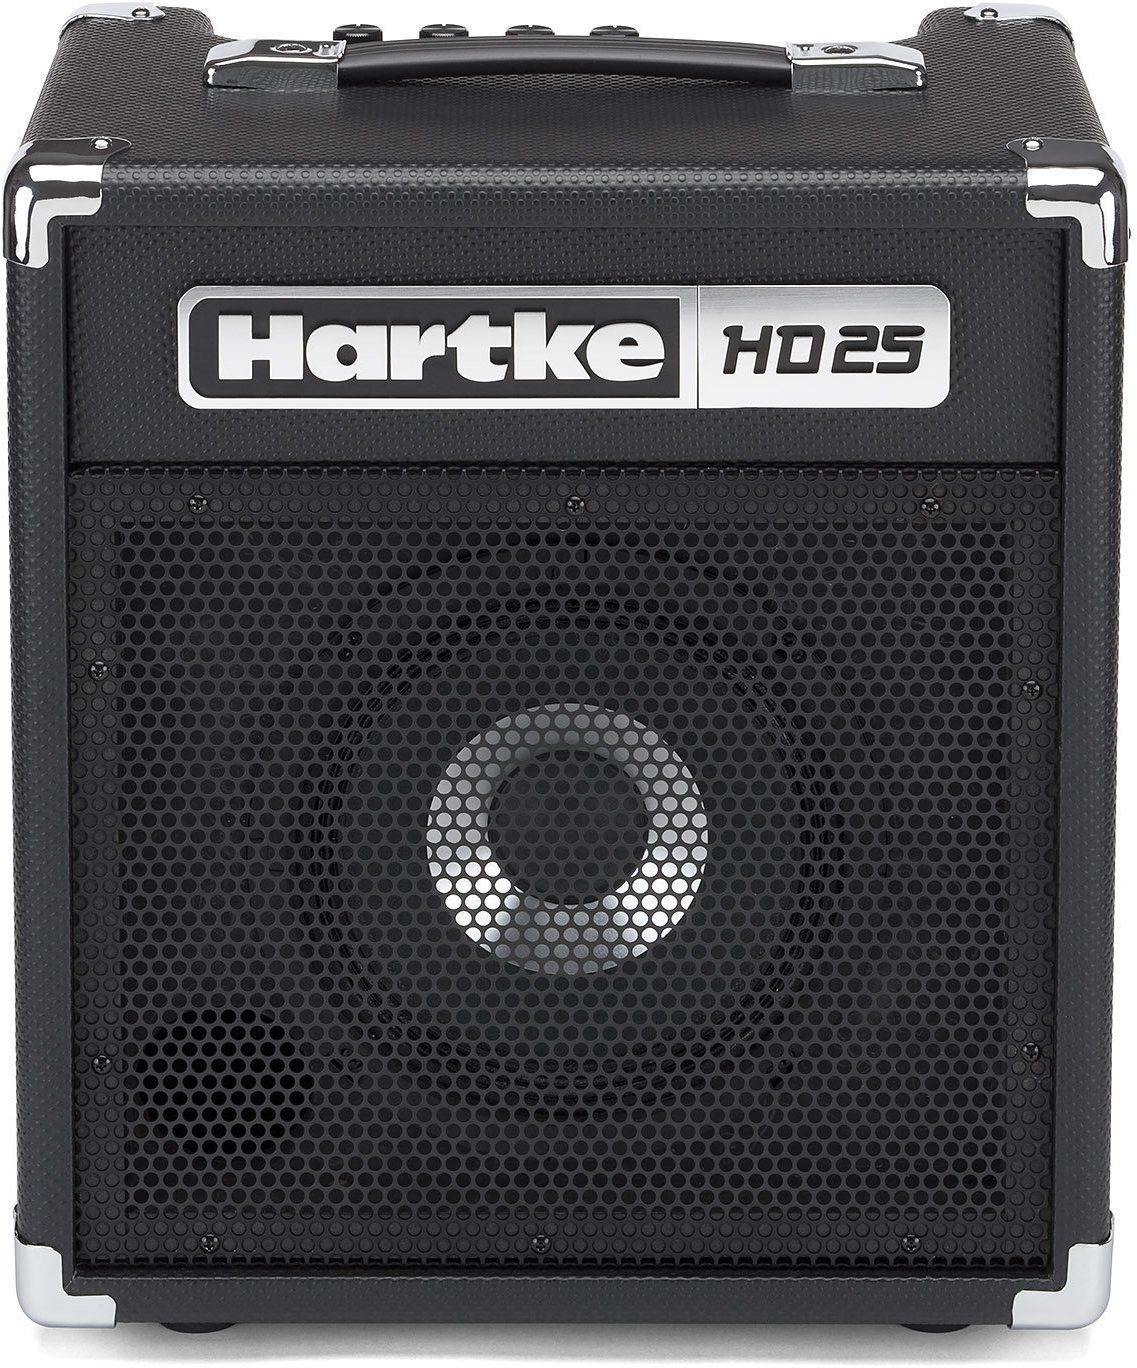 Mini combo Basse Hartke HD25